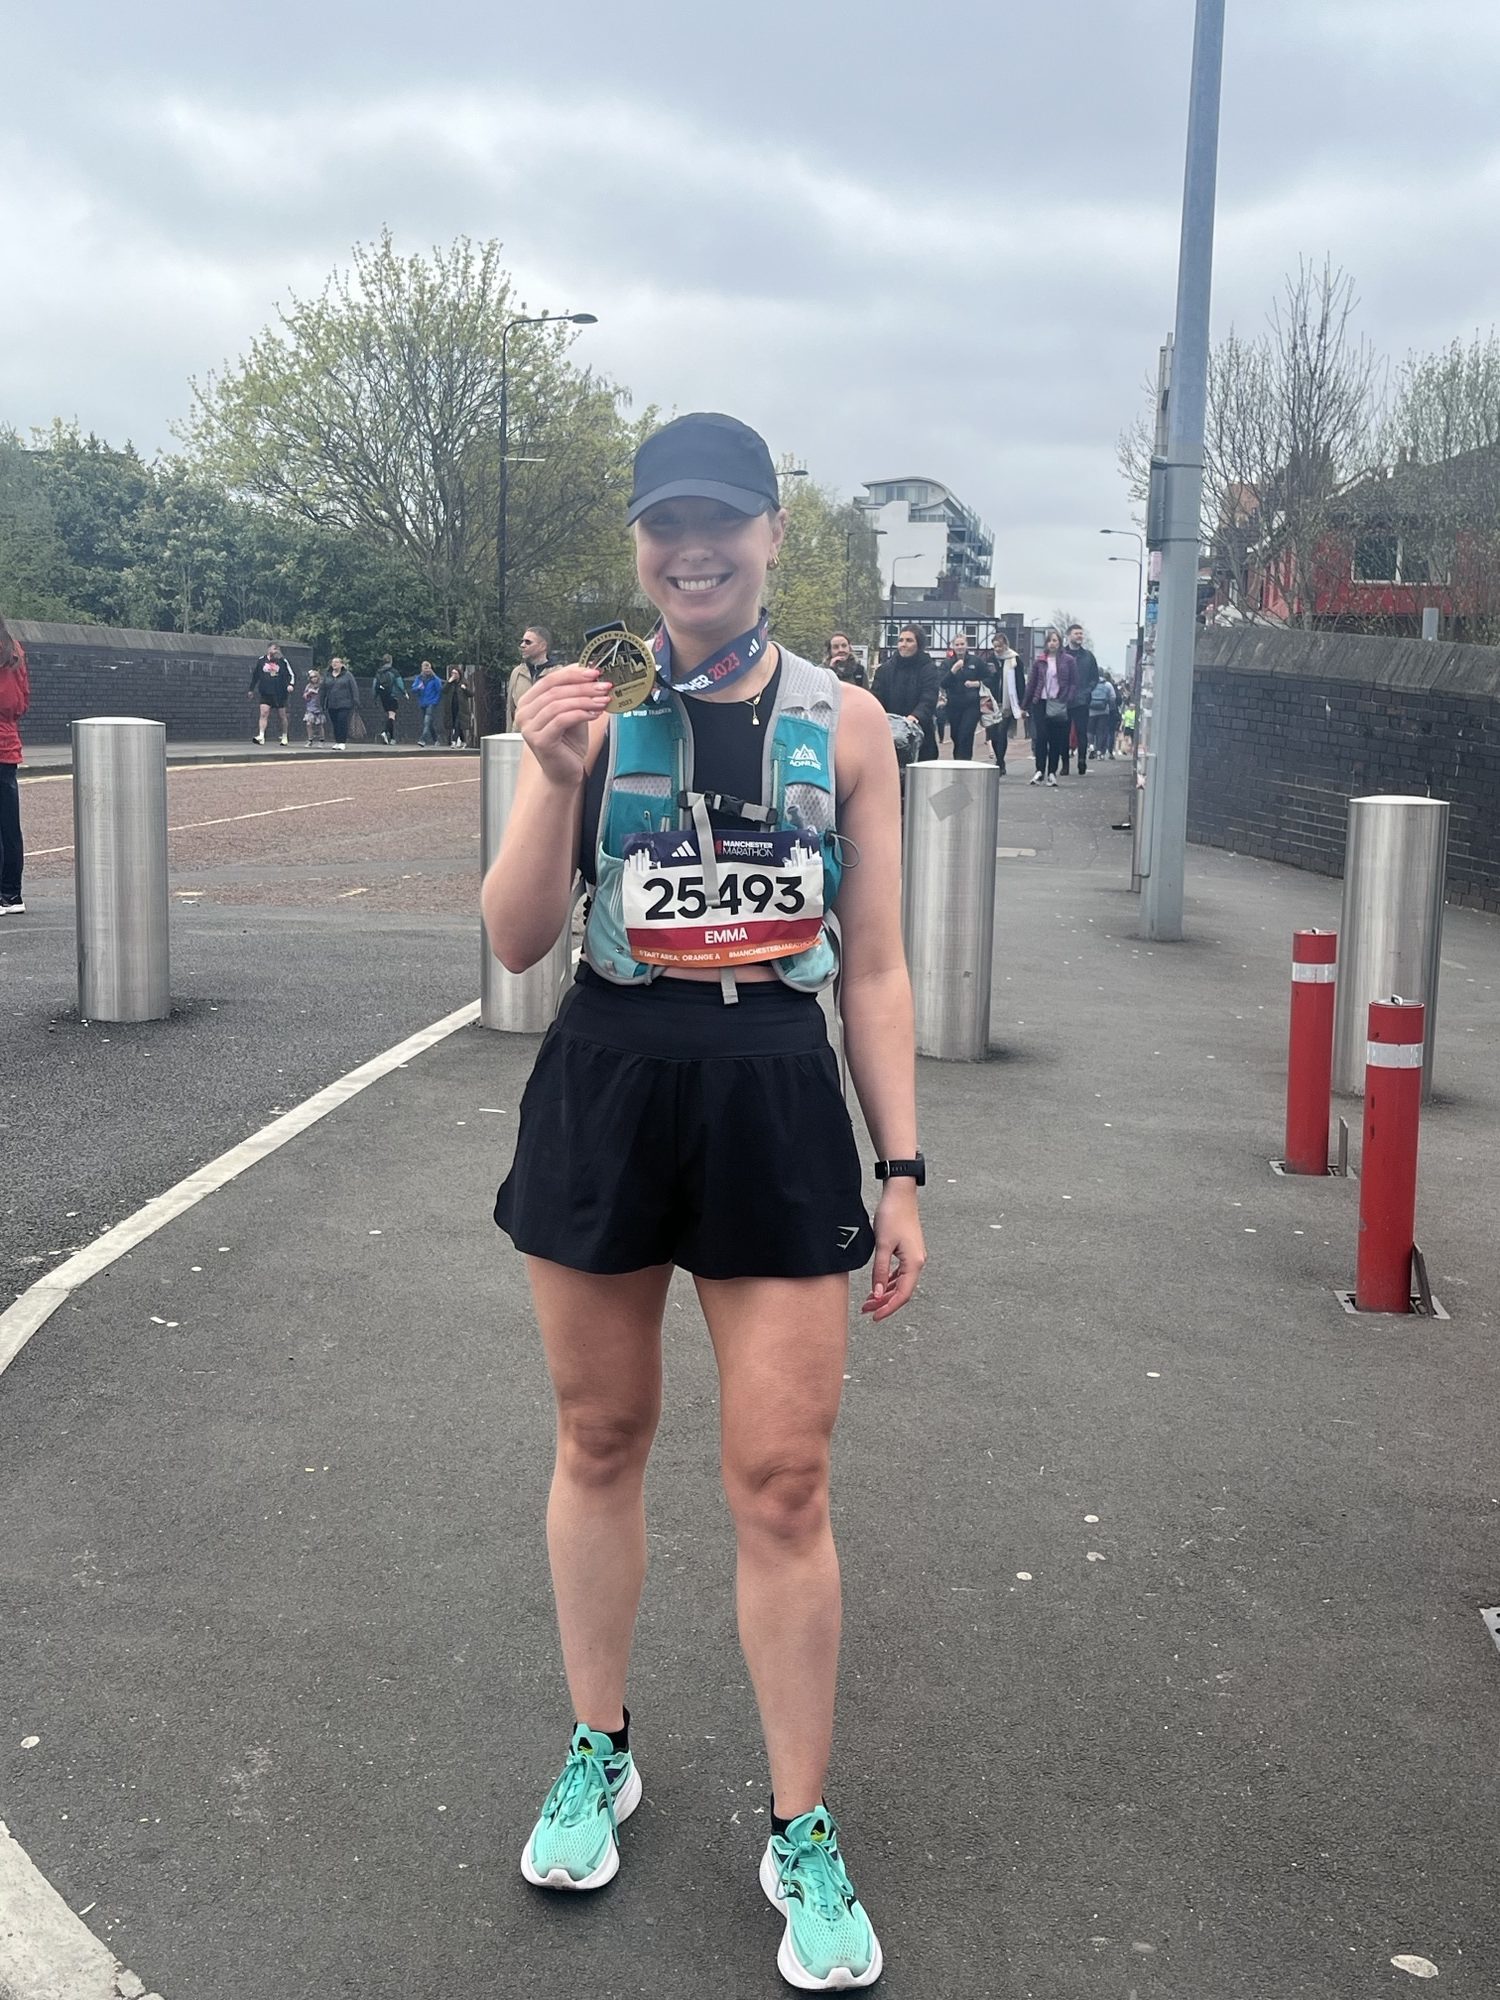 Edinburgh Marathon runner raises £9,000